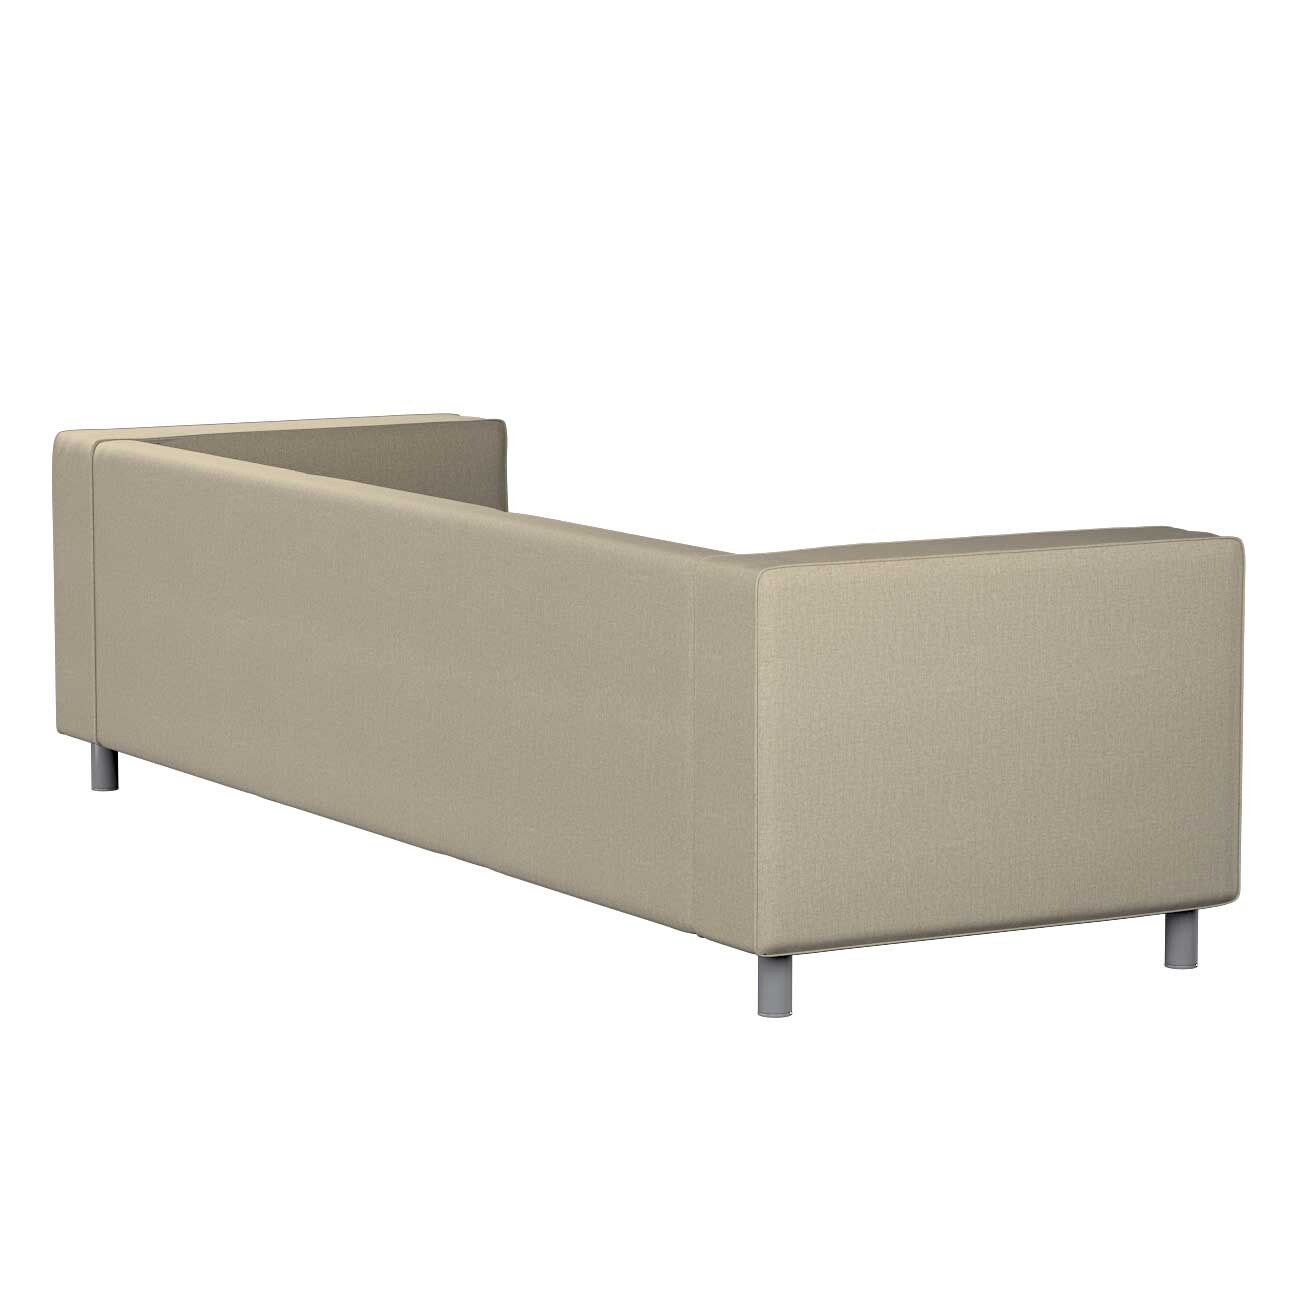 Bezug für Klippan 4-Sitzer Sofa, beige- grau, Bezug für Klippan 4-Sitzer, C günstig online kaufen